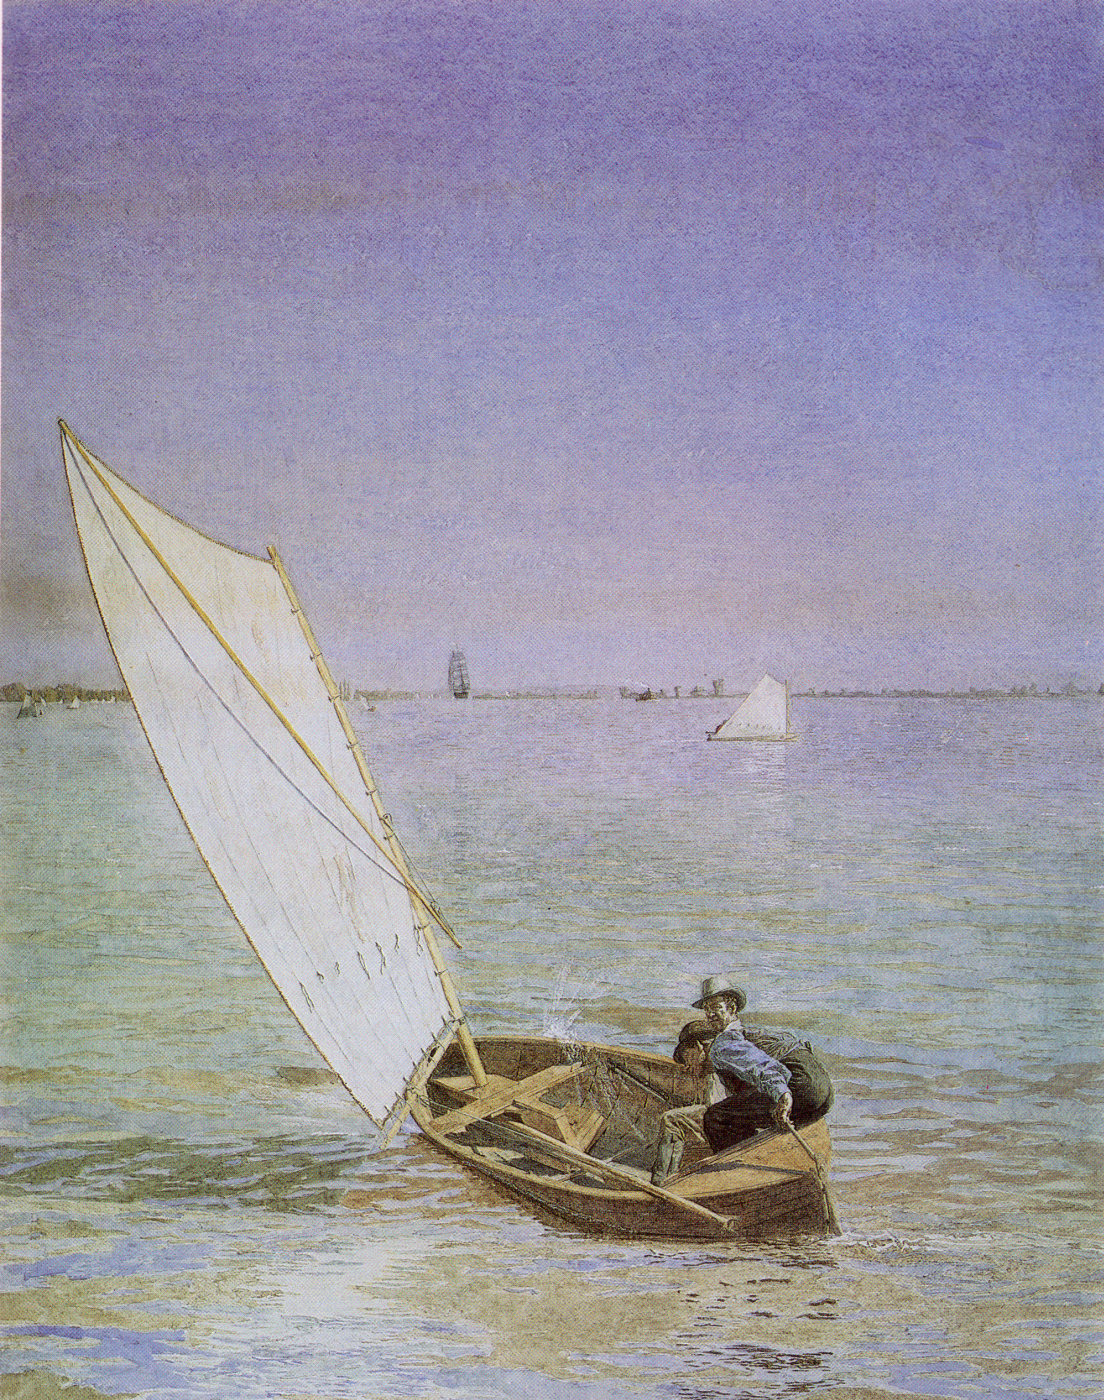 Thomas Eakins. The start of the regatta after the rain